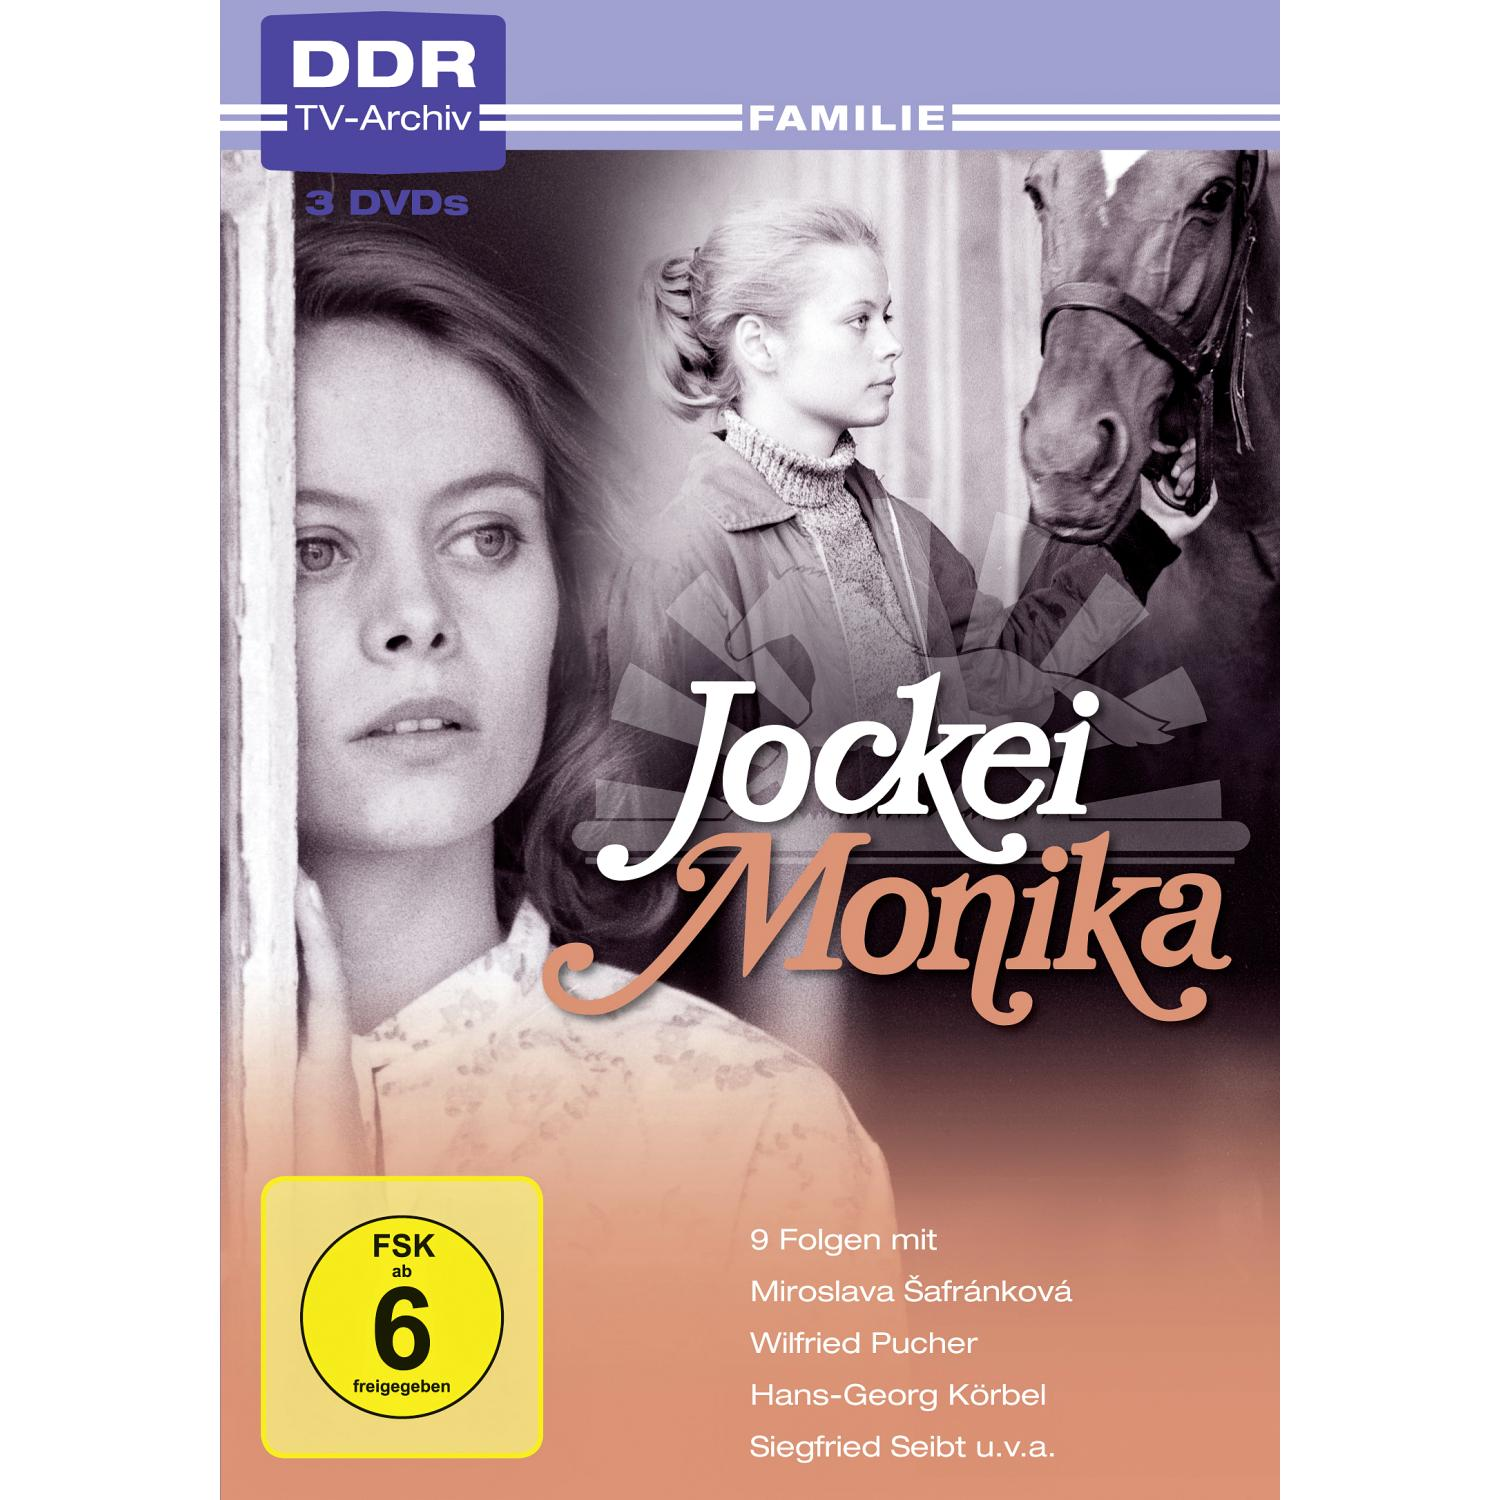 DVD TV-ARCHIV) MONIKA (DDR JOCKEI